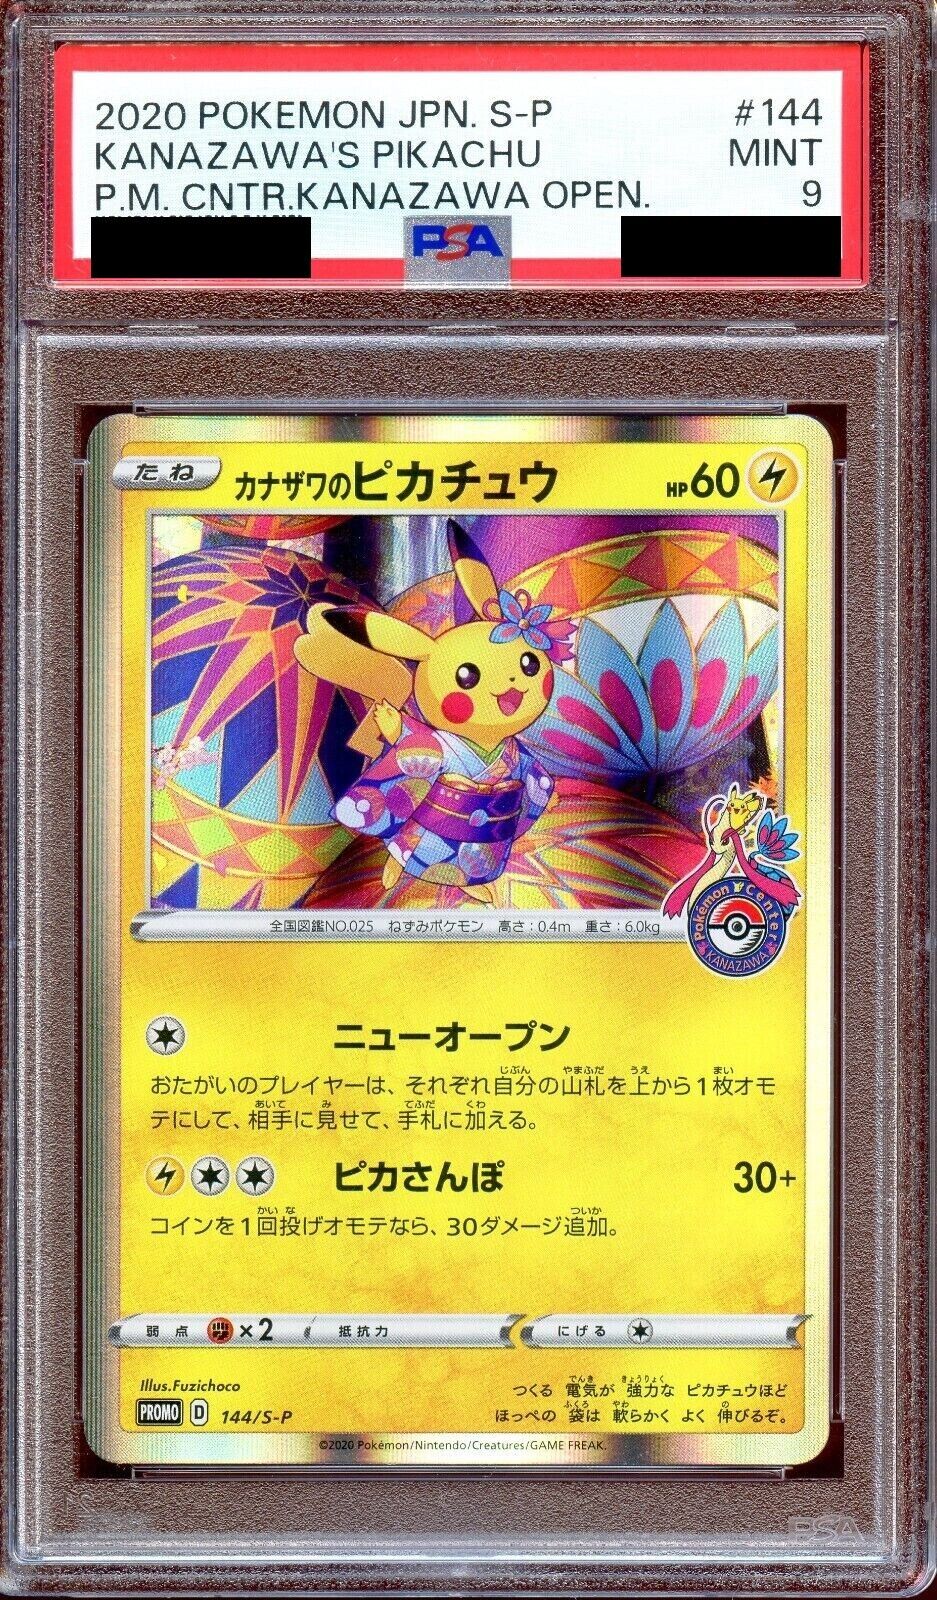 PSA 9 Kanazawa\'s Pikachu 144/S-P Center Promo Japanese Pokemon Card MINT